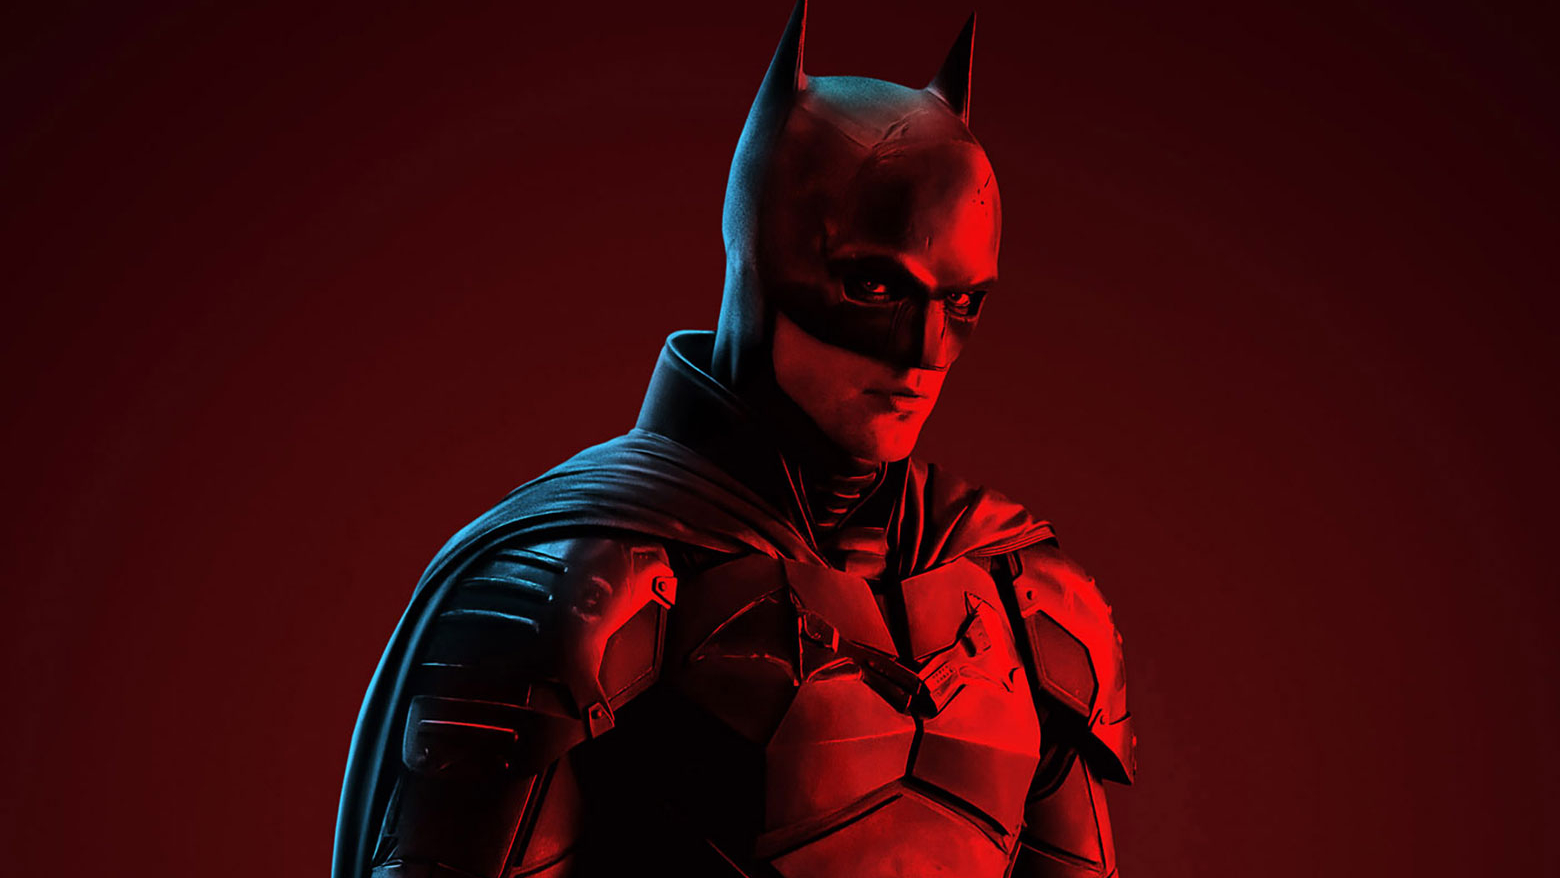 The Batman Review: Better Than The Dark Knight